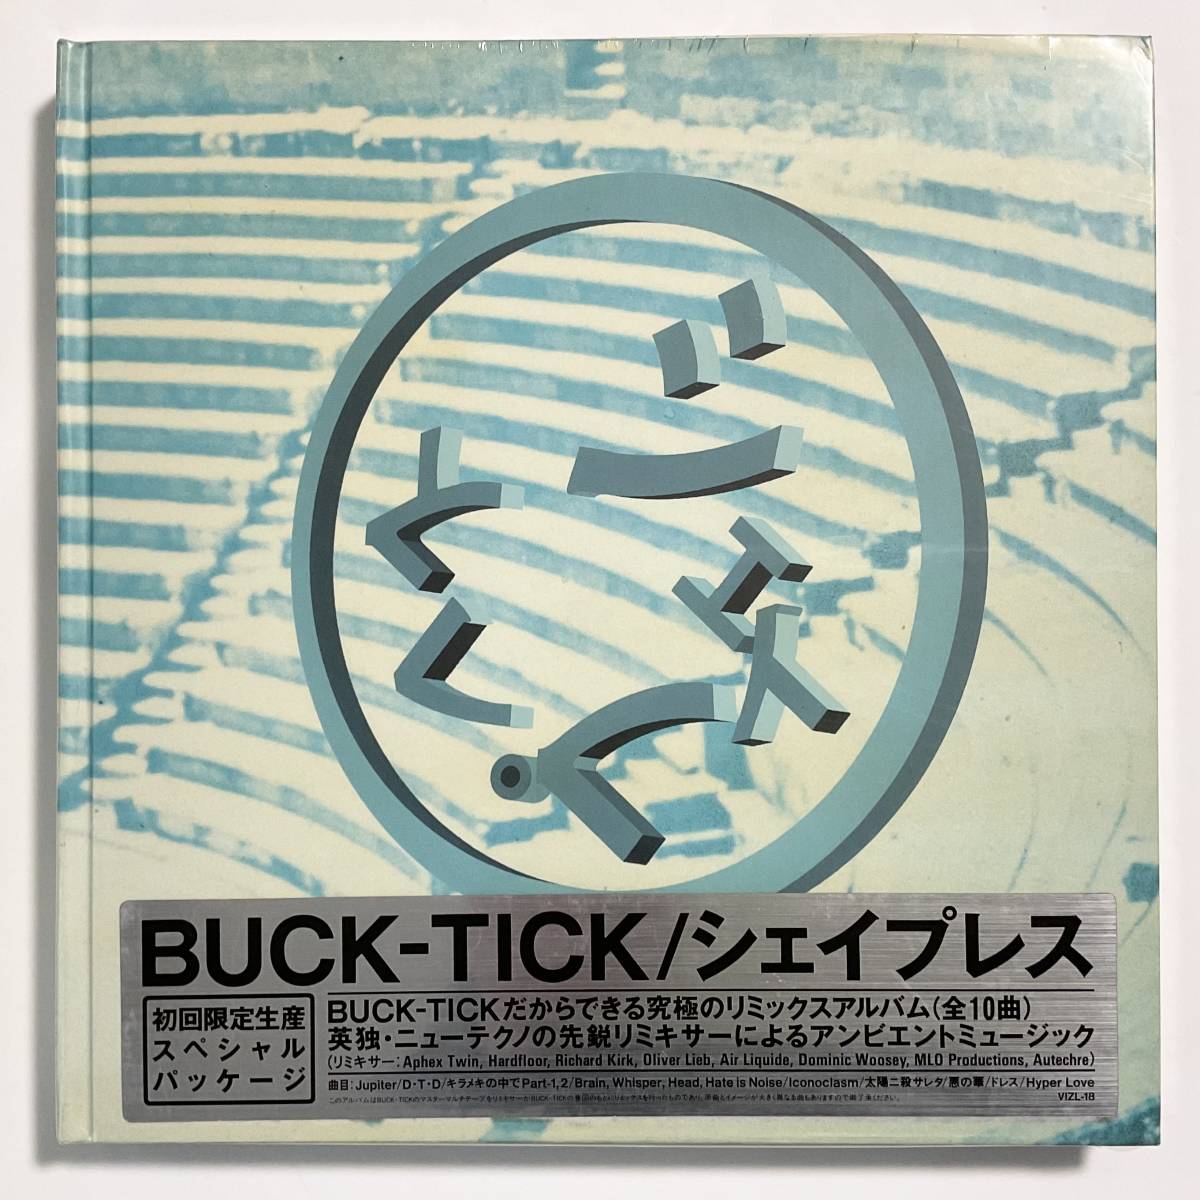 BUCK-TICK TO-SEARCH 抽プレ当選 復刻版CD CDS-1390